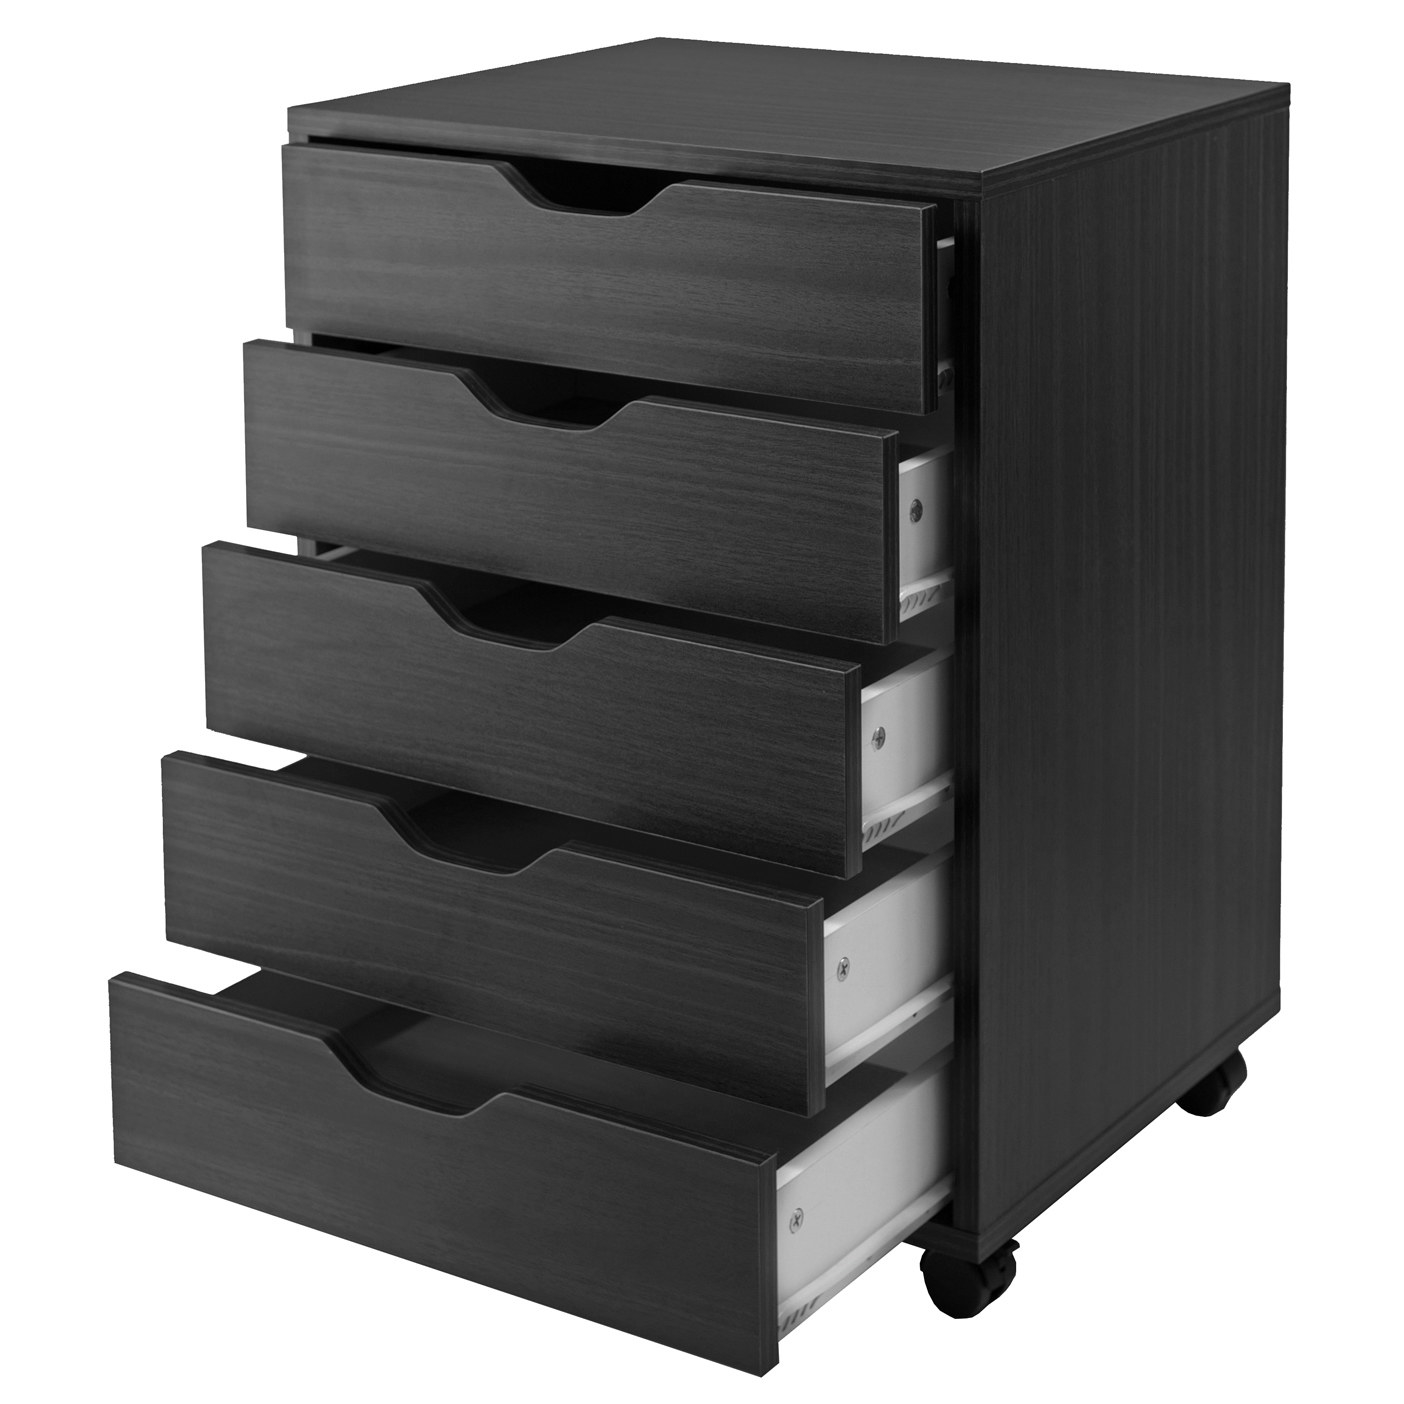 Black 5-drawer cabinet on wheels